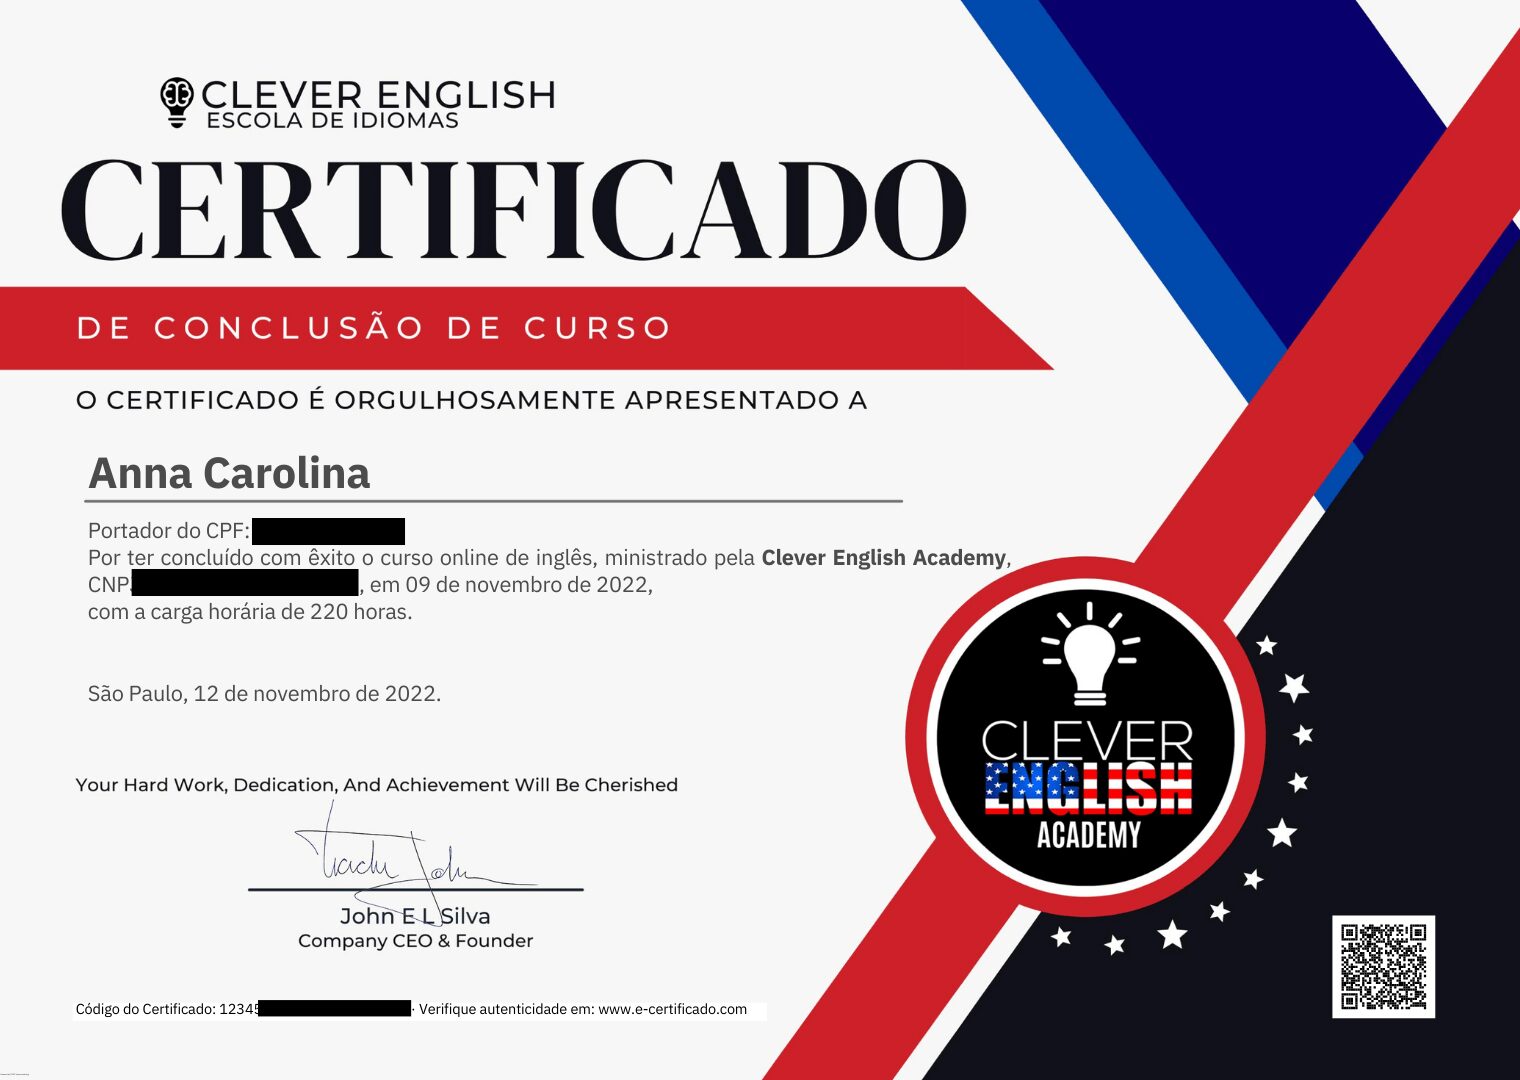  Curso Clever English certificado mec valido